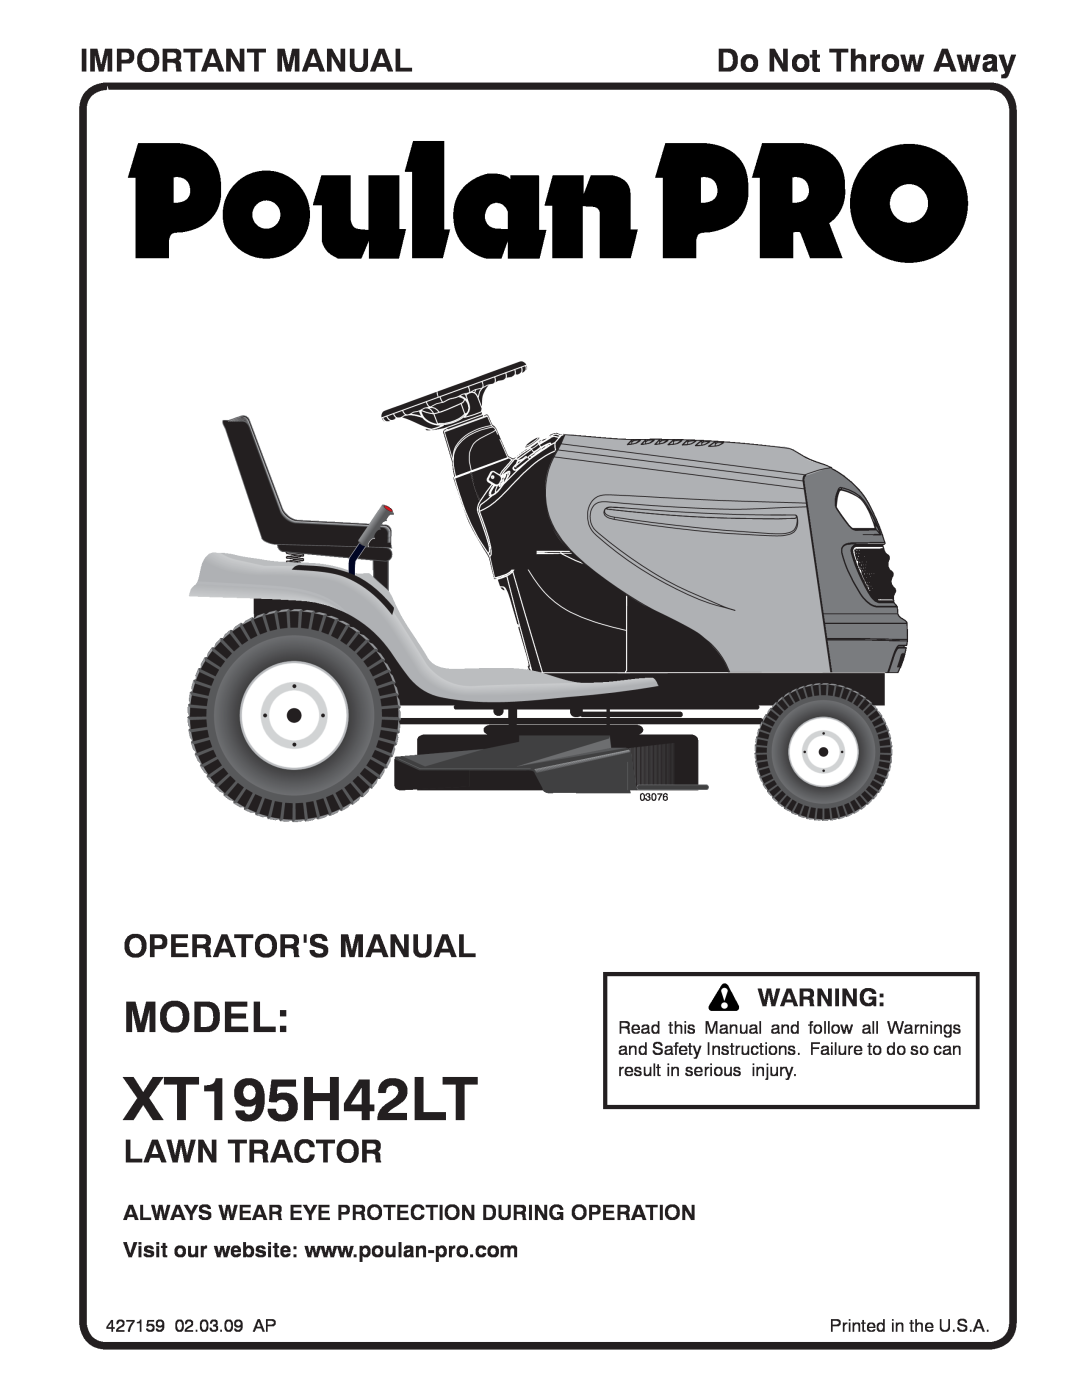 Poulan 427159 manual Model, Important Manual, Operators Manual, Lawn Tractor, XT195H42LT, Do Not Throw Away, 03076 